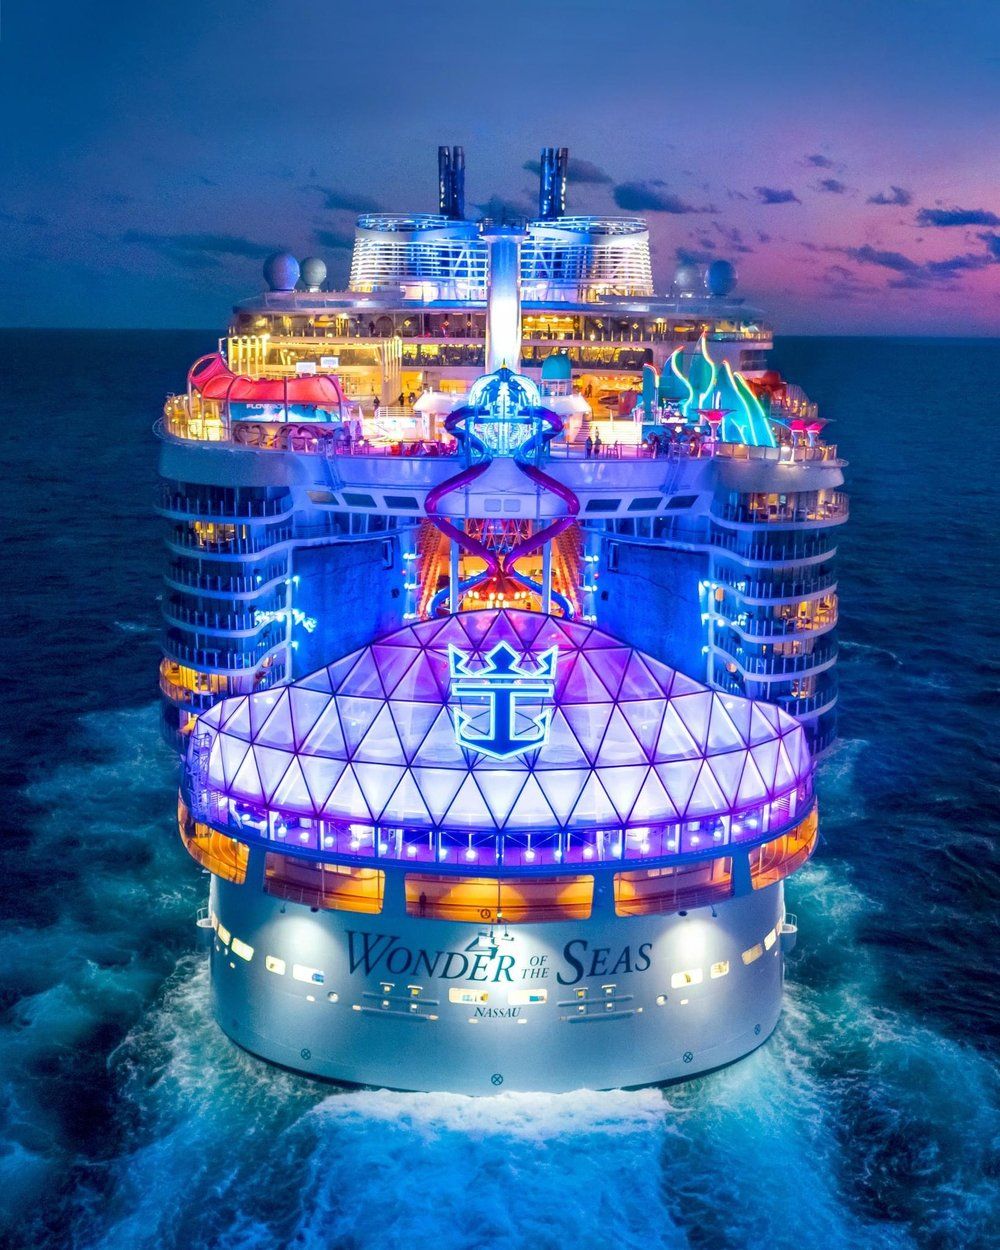 Summer cruise on Wonder of the Seas